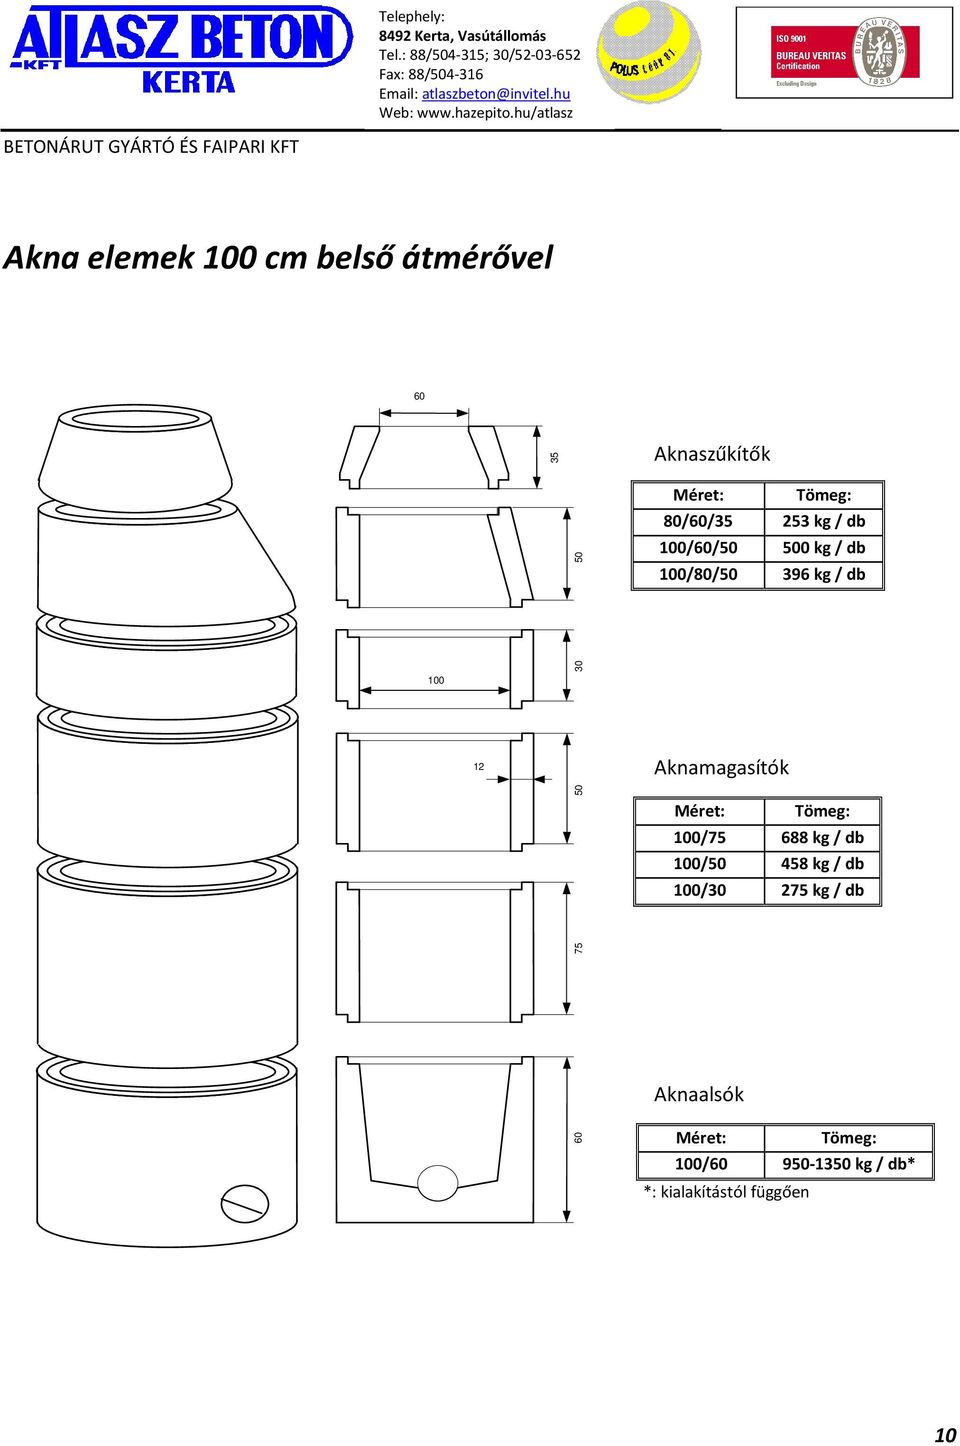 Aknamagasítók Méret: Tömeg: 0/75 6 kg / db 0/ 45 kg / db 0/ 275